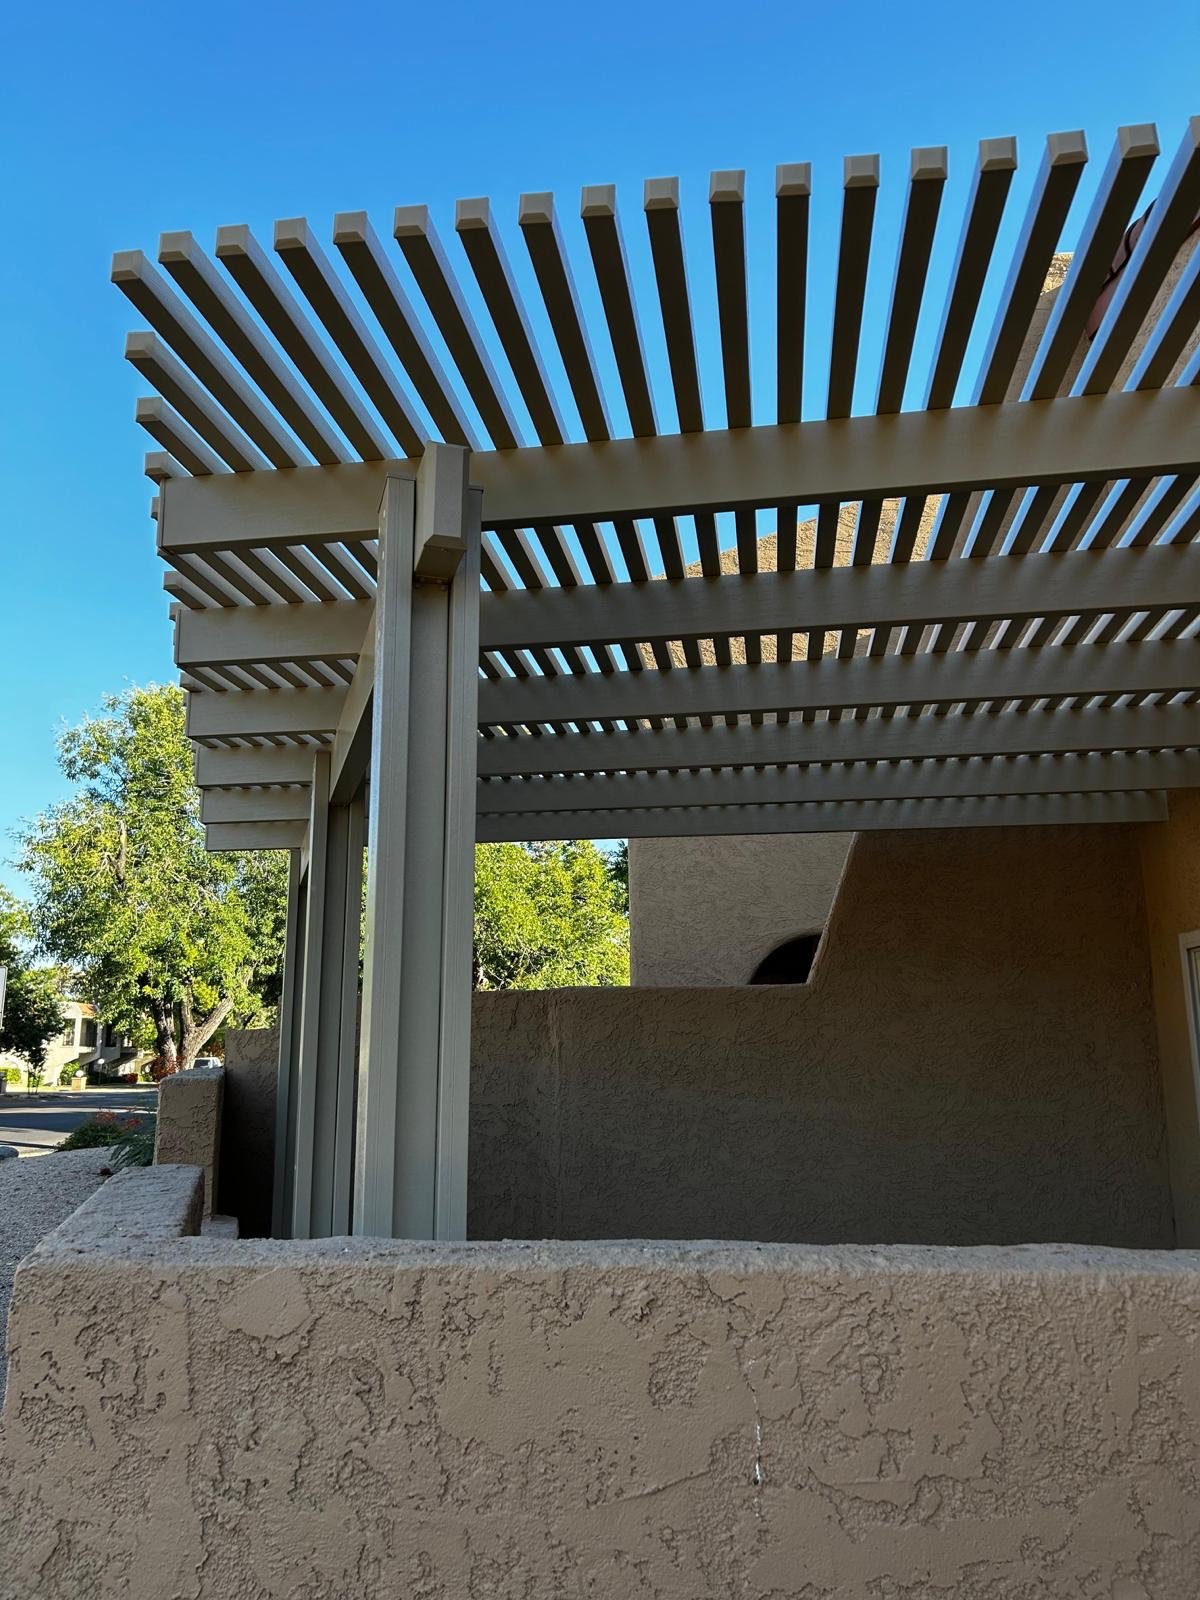 Lattice Patio Cover Installation Services by Outshine Patio Cover, Mesa AZ